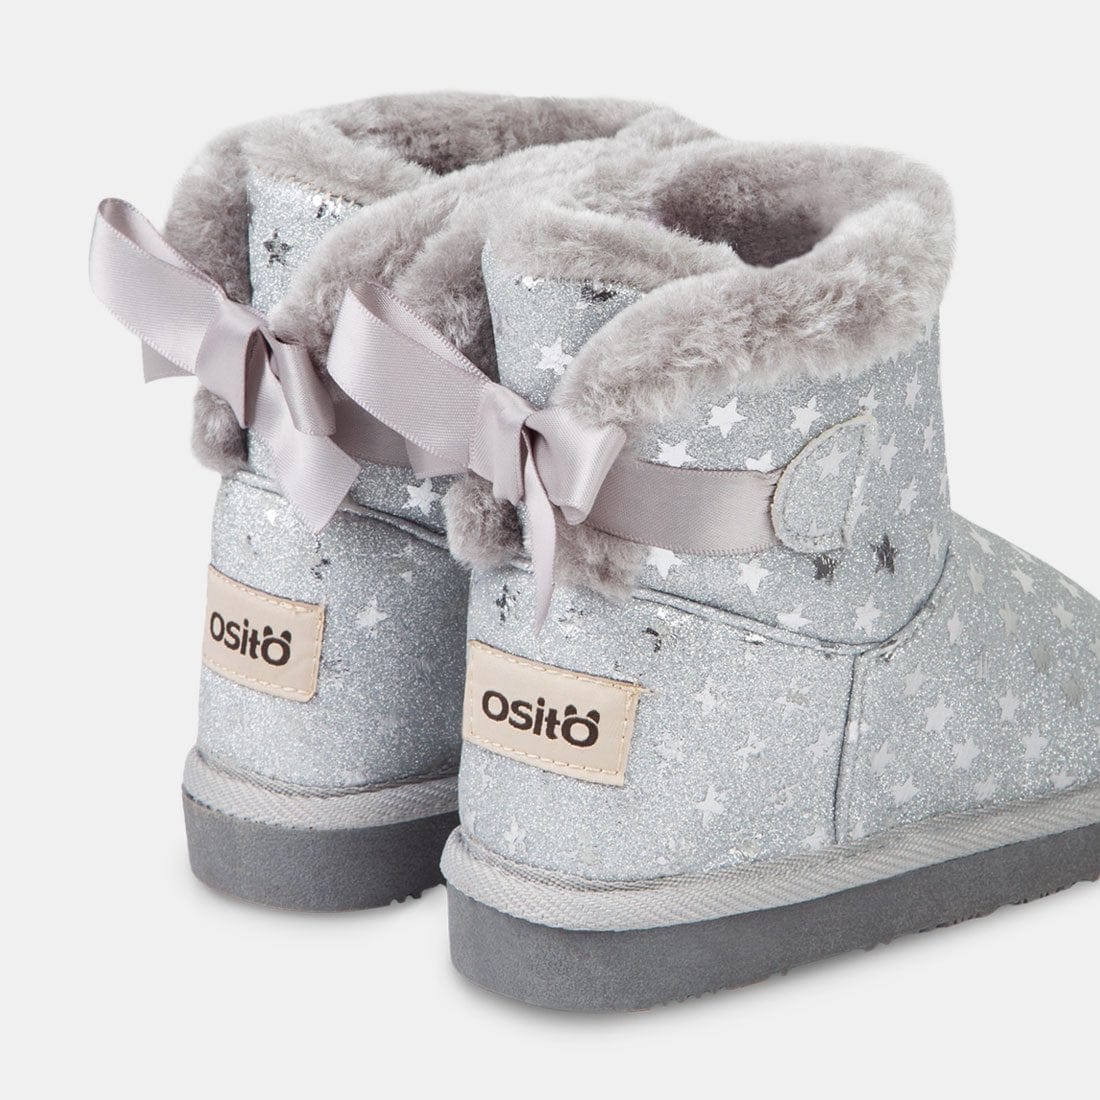 OSITO Shoes Botas Australianas de Bebé Glitter Estrellas Plata